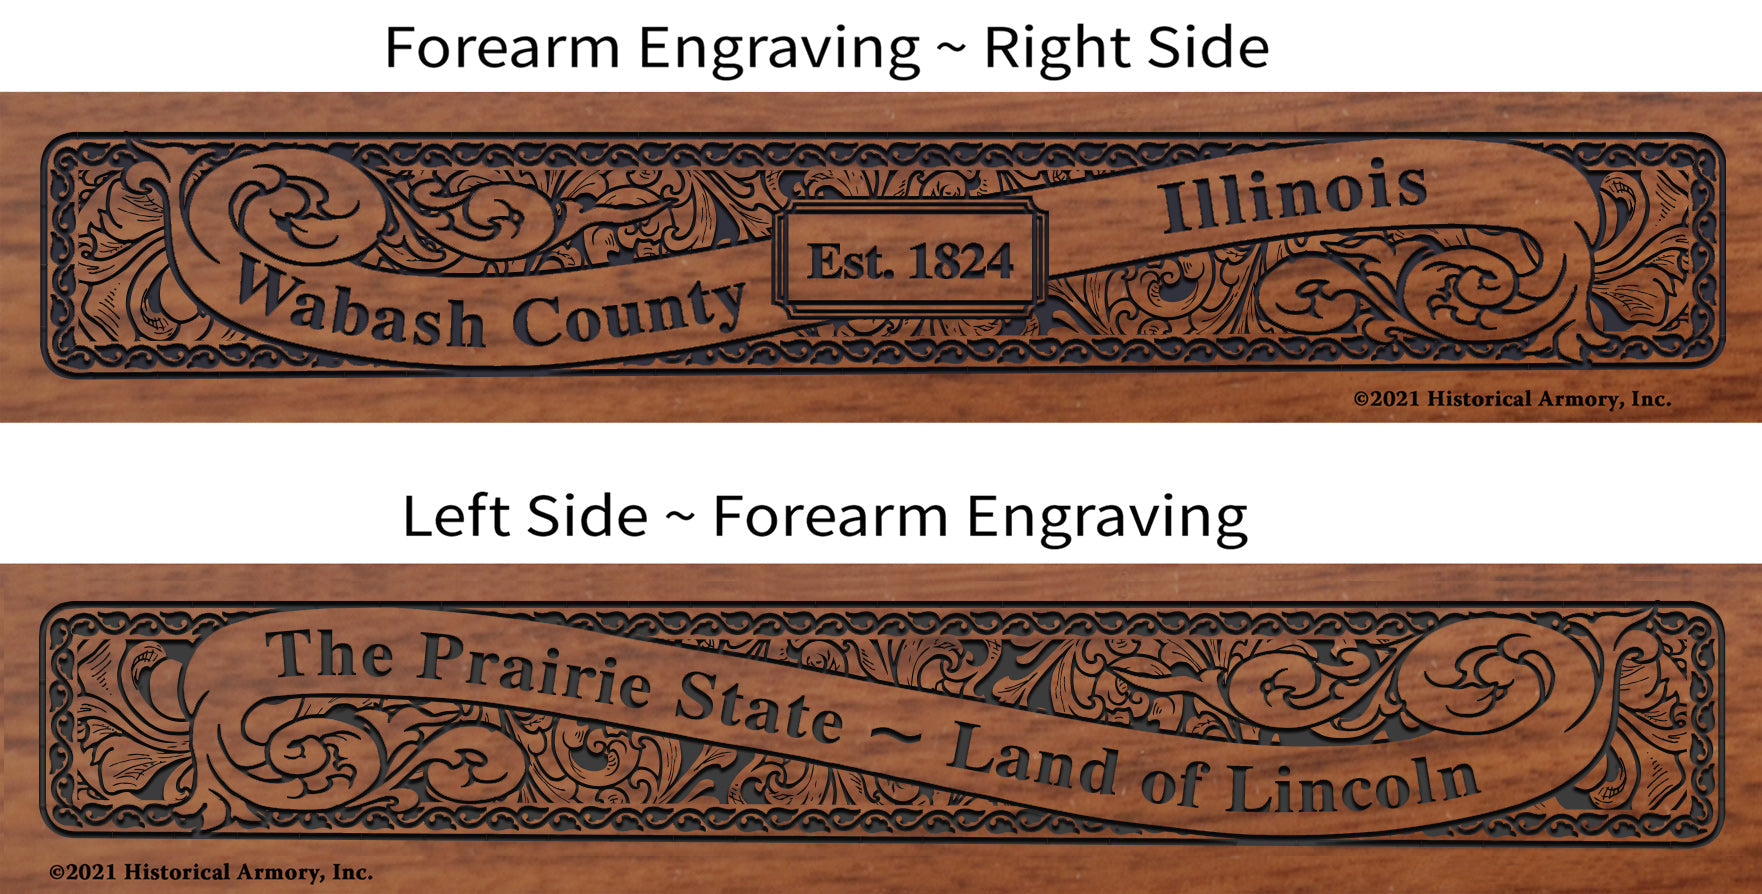 Wabash County Illinois Establishment and Motto History Engraved Rifle Forearm